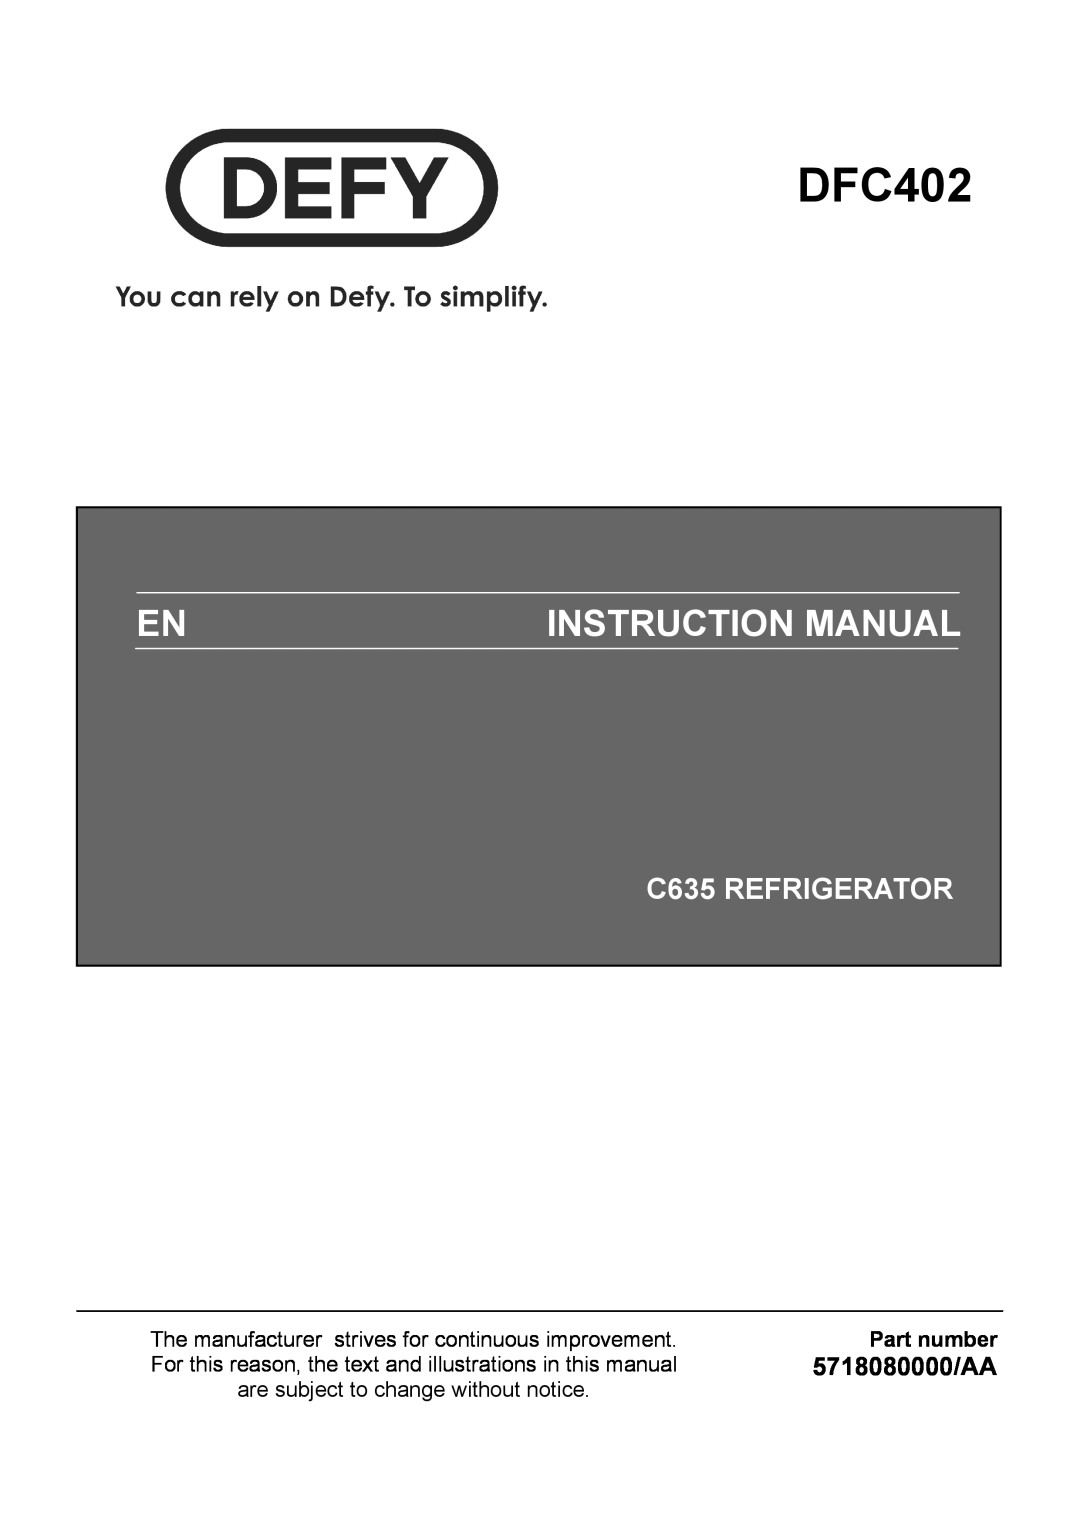 Defy Appliances DFC402 instruction manual C635 REFRIGERATOR, 5718080000/AA, Part number 